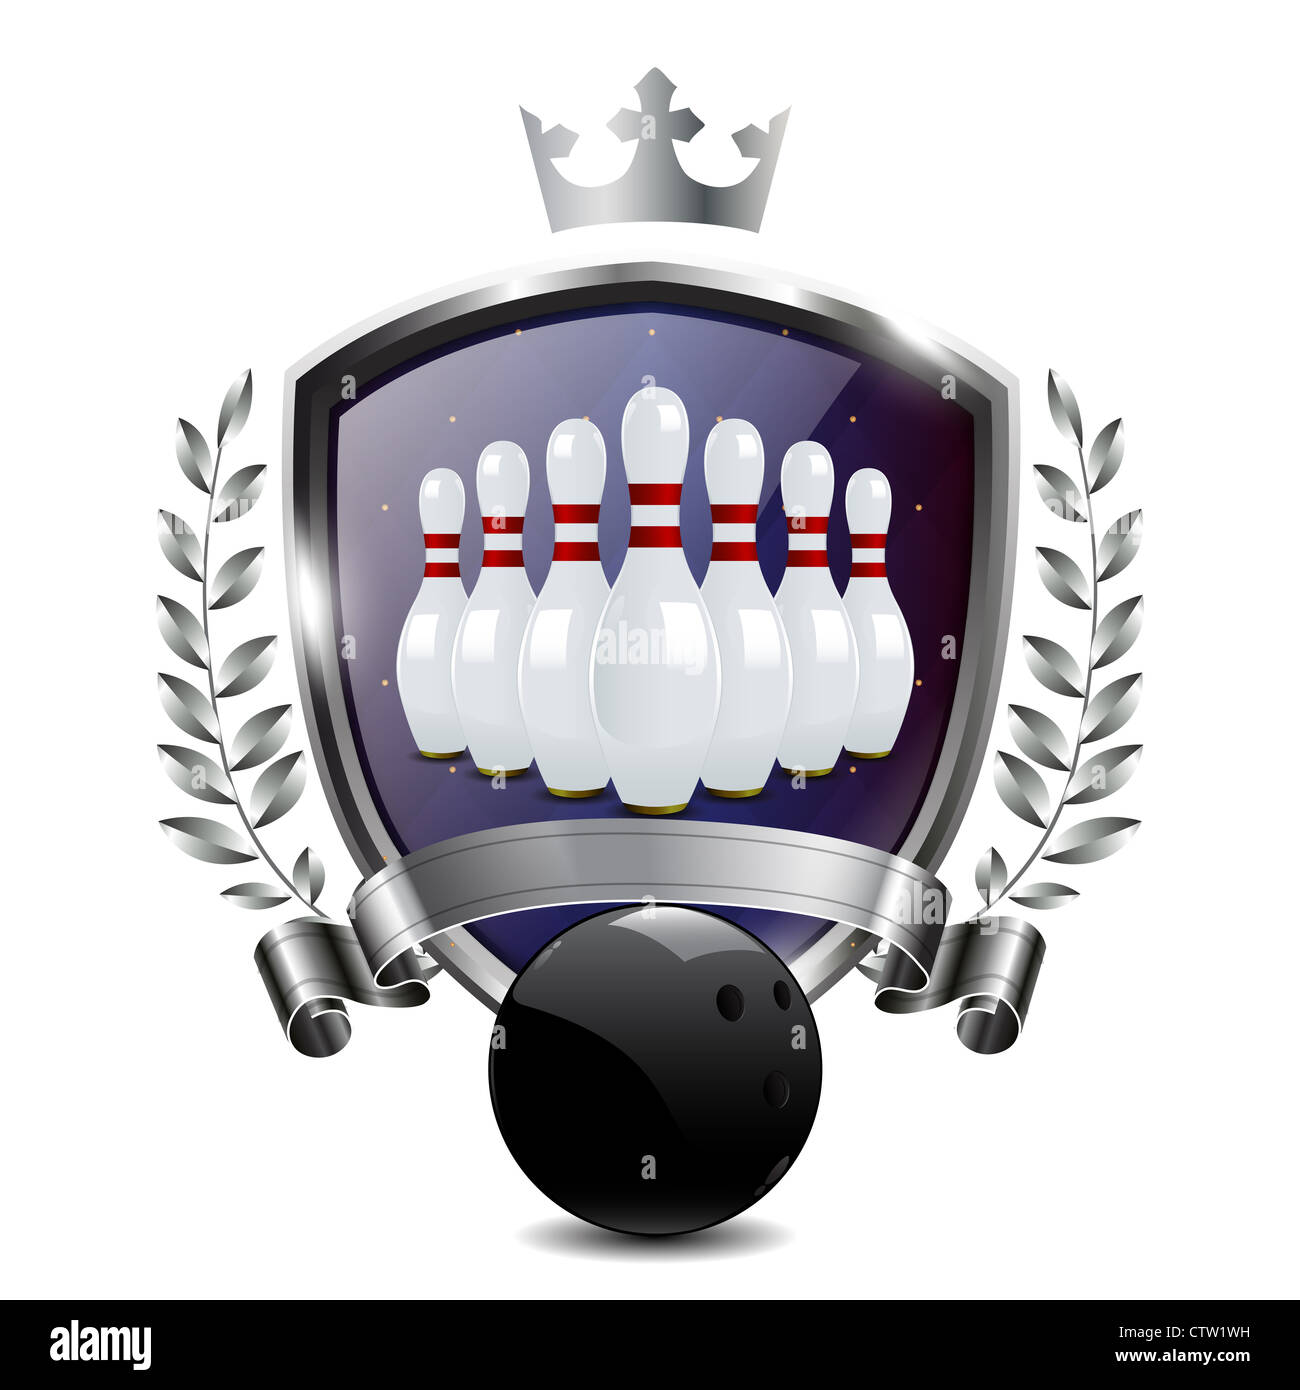 Emblem des Sports champion Bowling Stockfoto